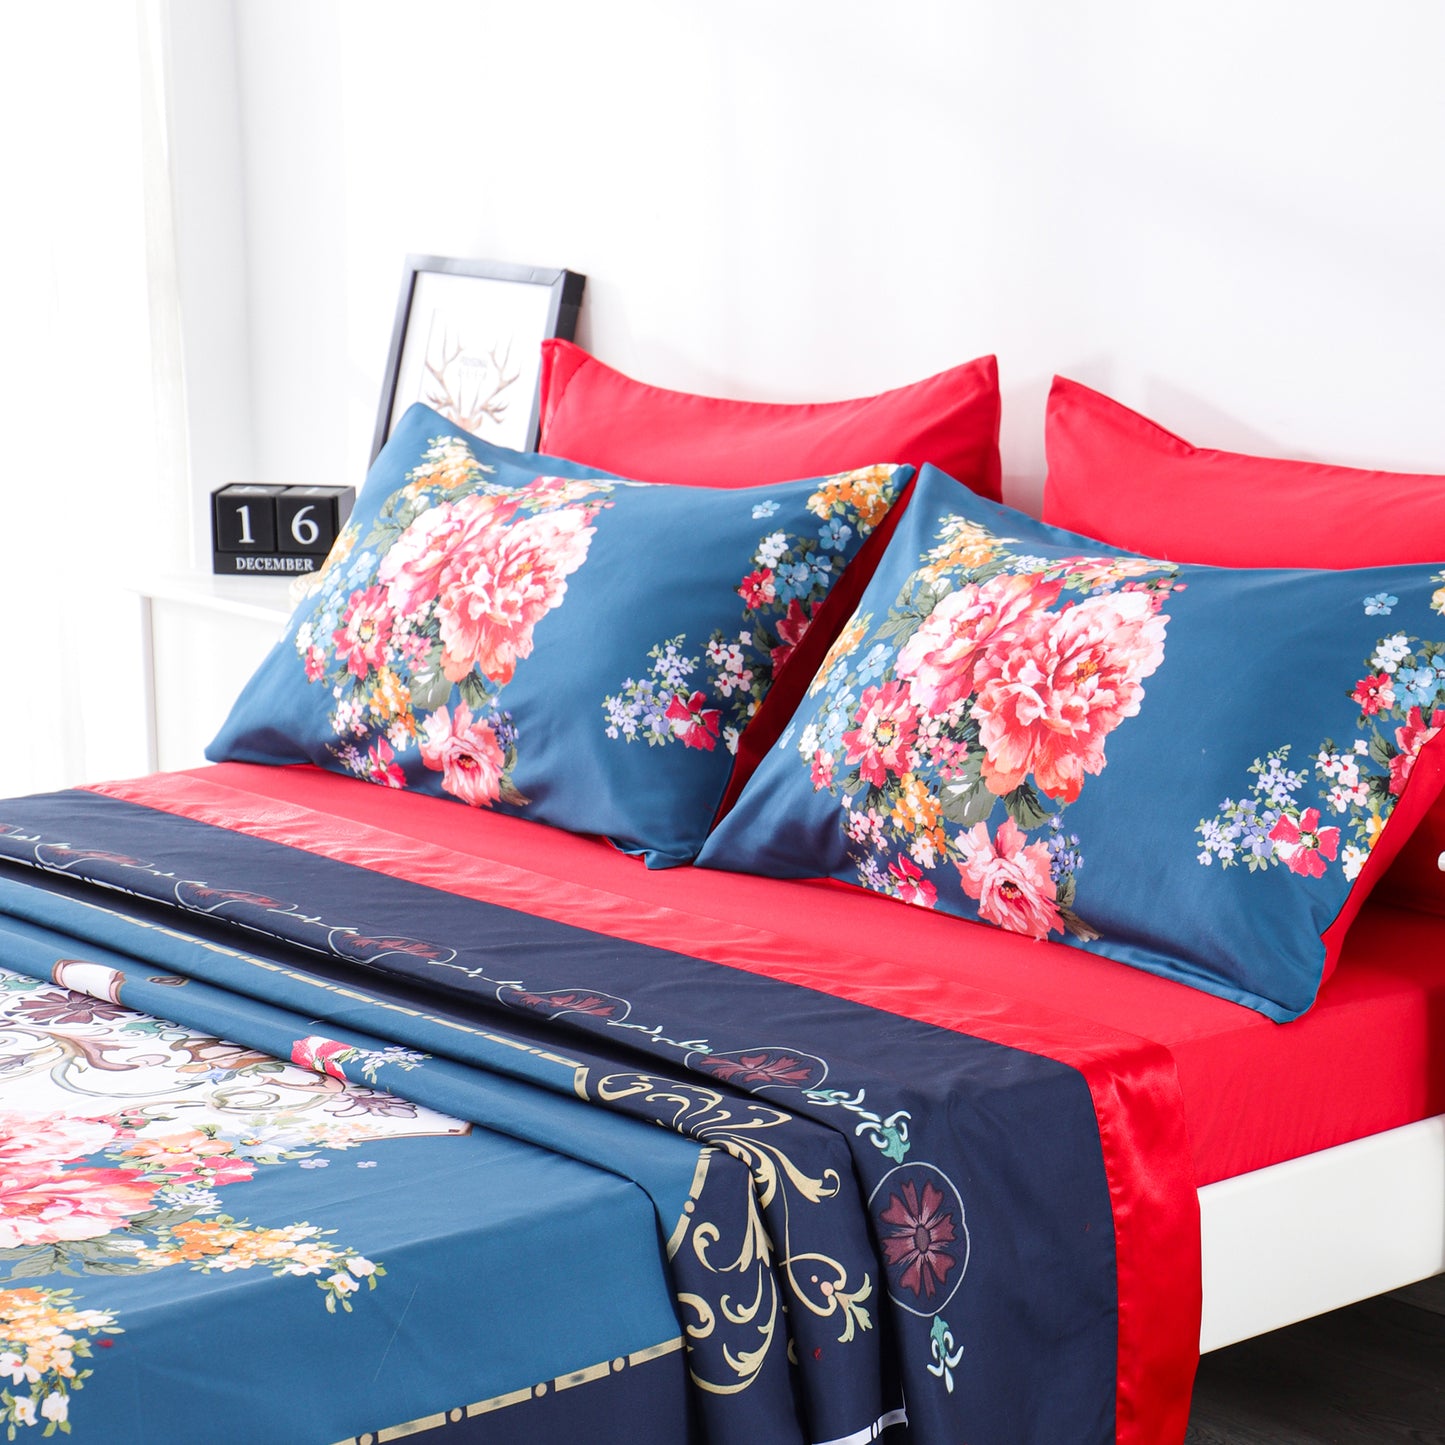 6 Piece Bed Sheet set-Red Rose